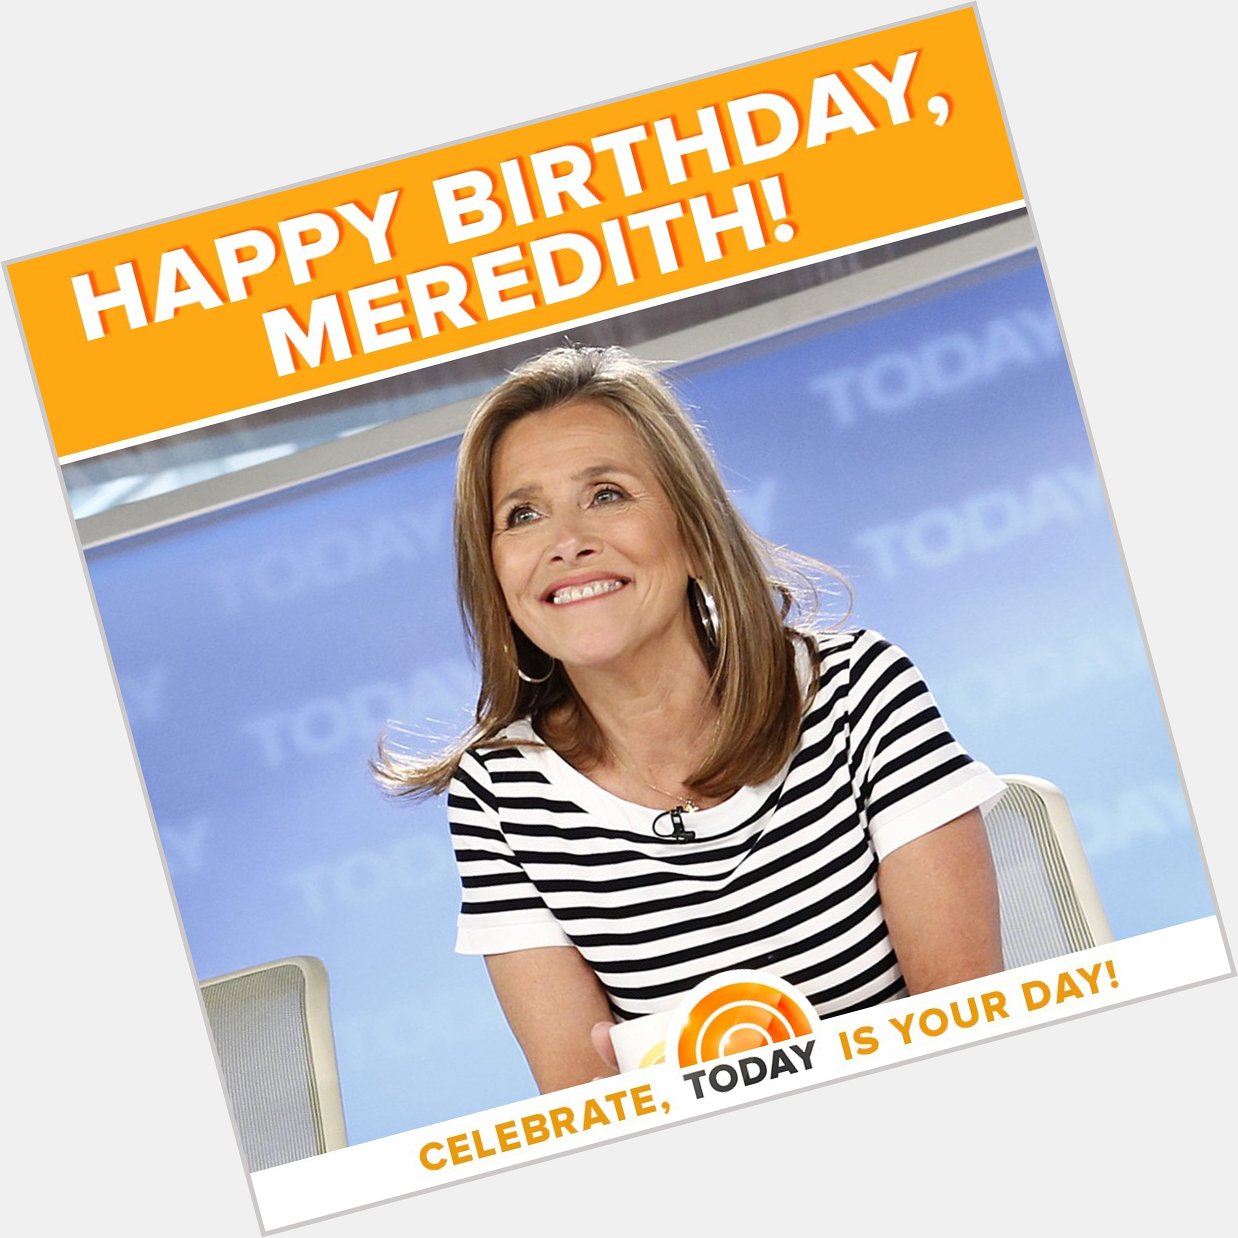 Happy birthday to Meredith!  